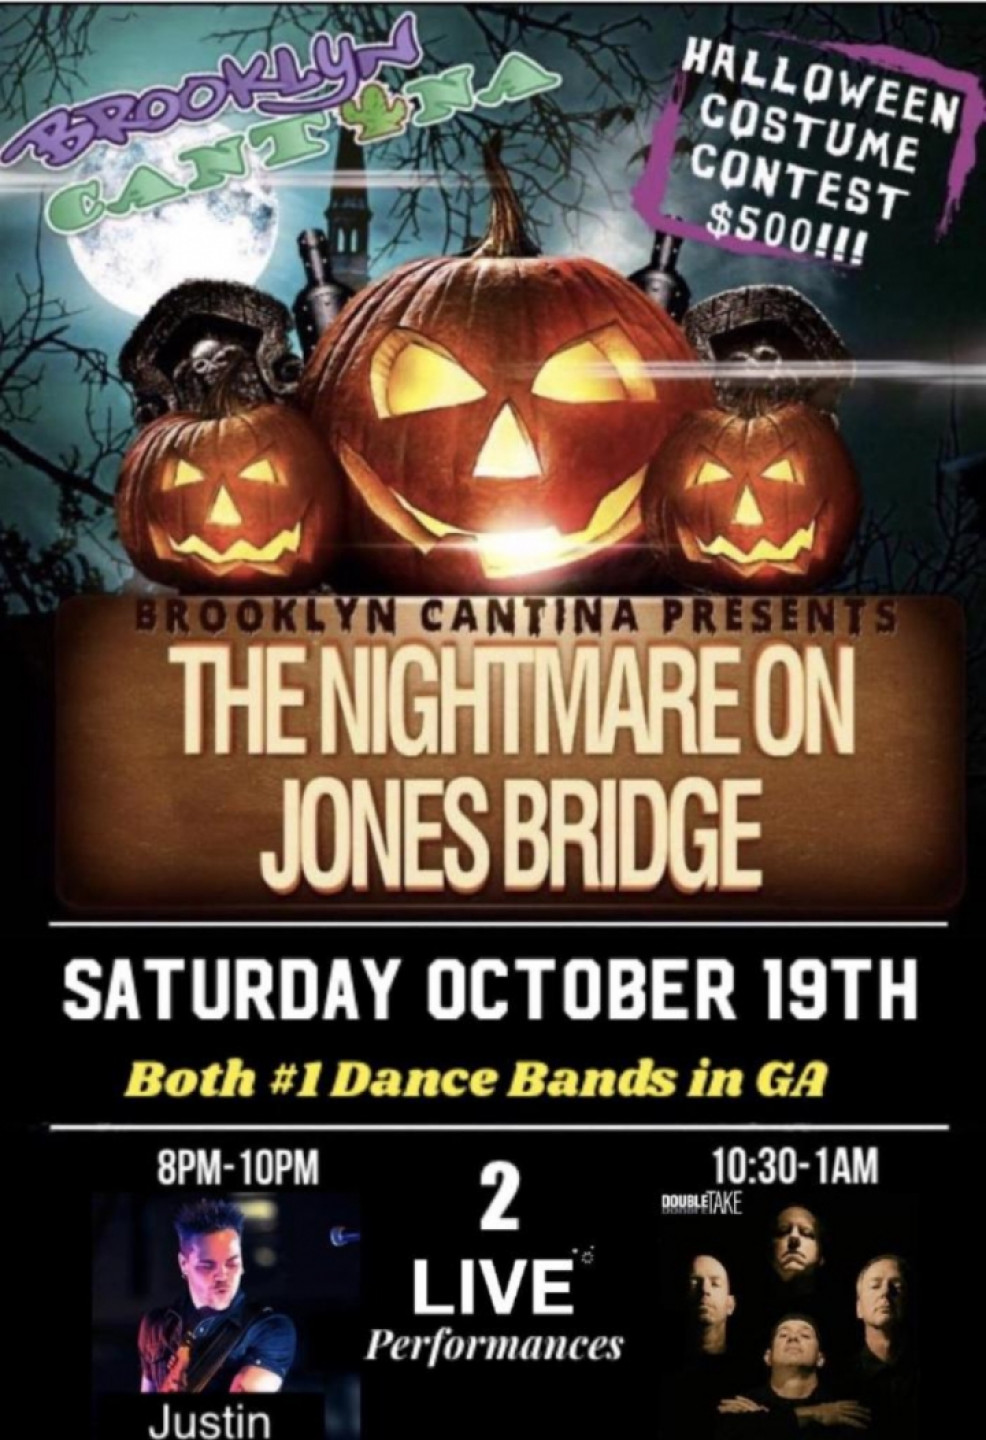 Brooklyn Cantina Presents The Nightmare On Jones Bridge Saturday, October 19th 